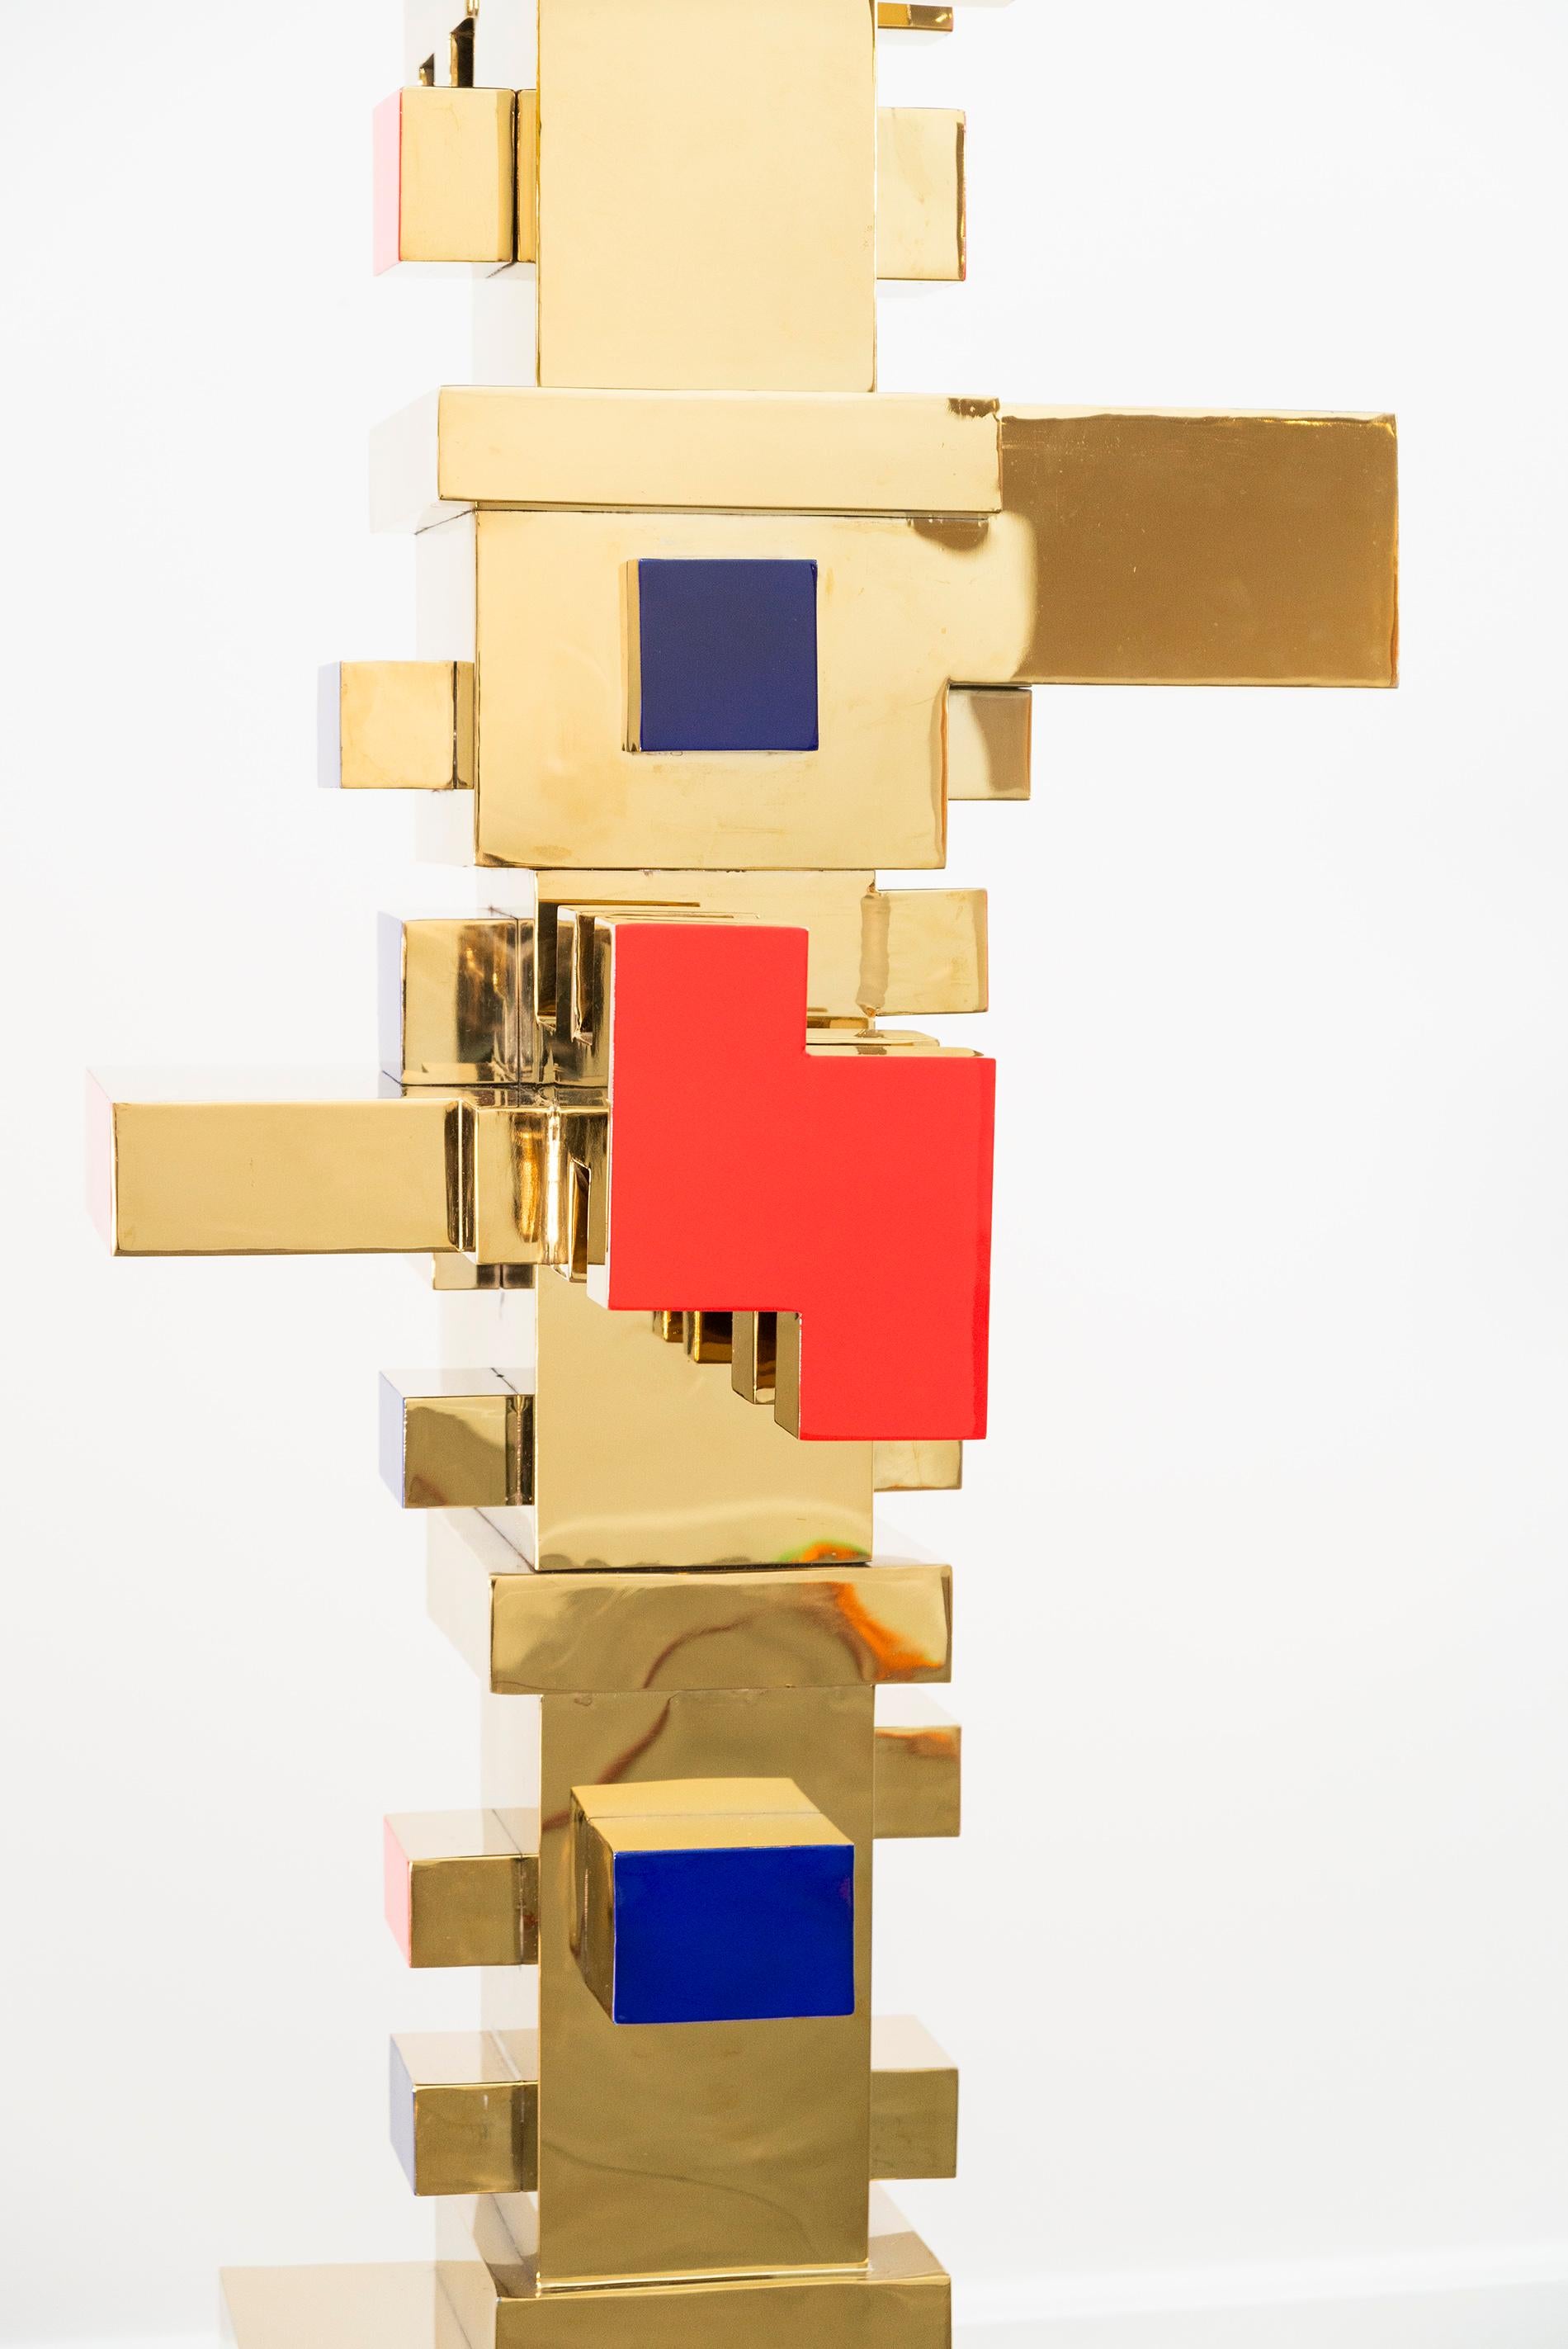 Blocs empilés - or, rouge, bleu - totem, sculpture en acier inoxydable plaqué or - Or Abstract Sculpture par Viktor Mitic